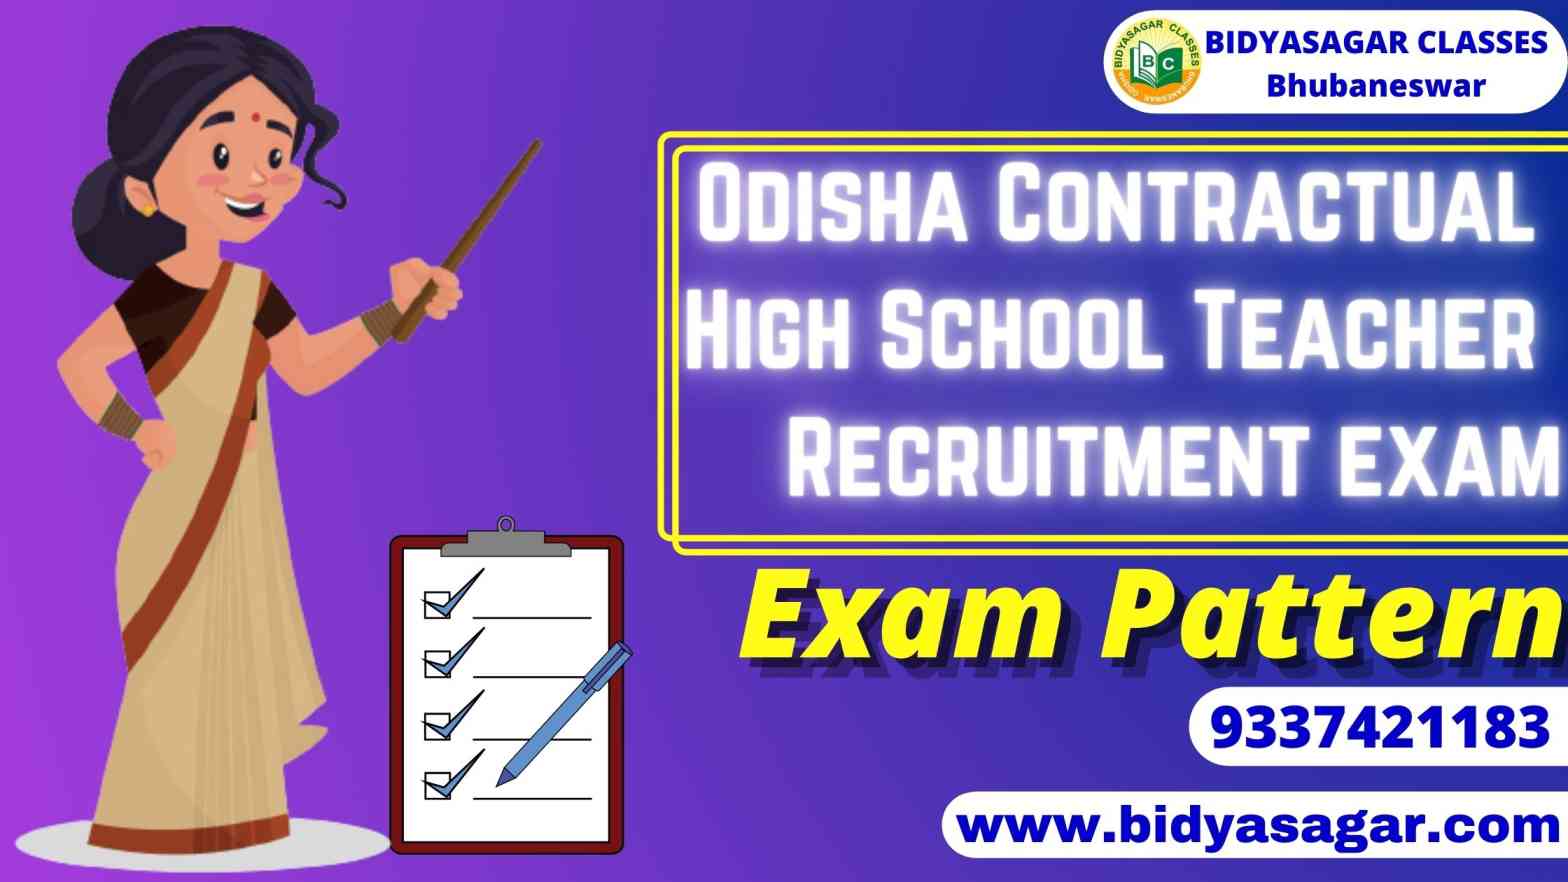 Odisha Contractual High School Teacher Recruitment Exam 2022 Exam Pattern